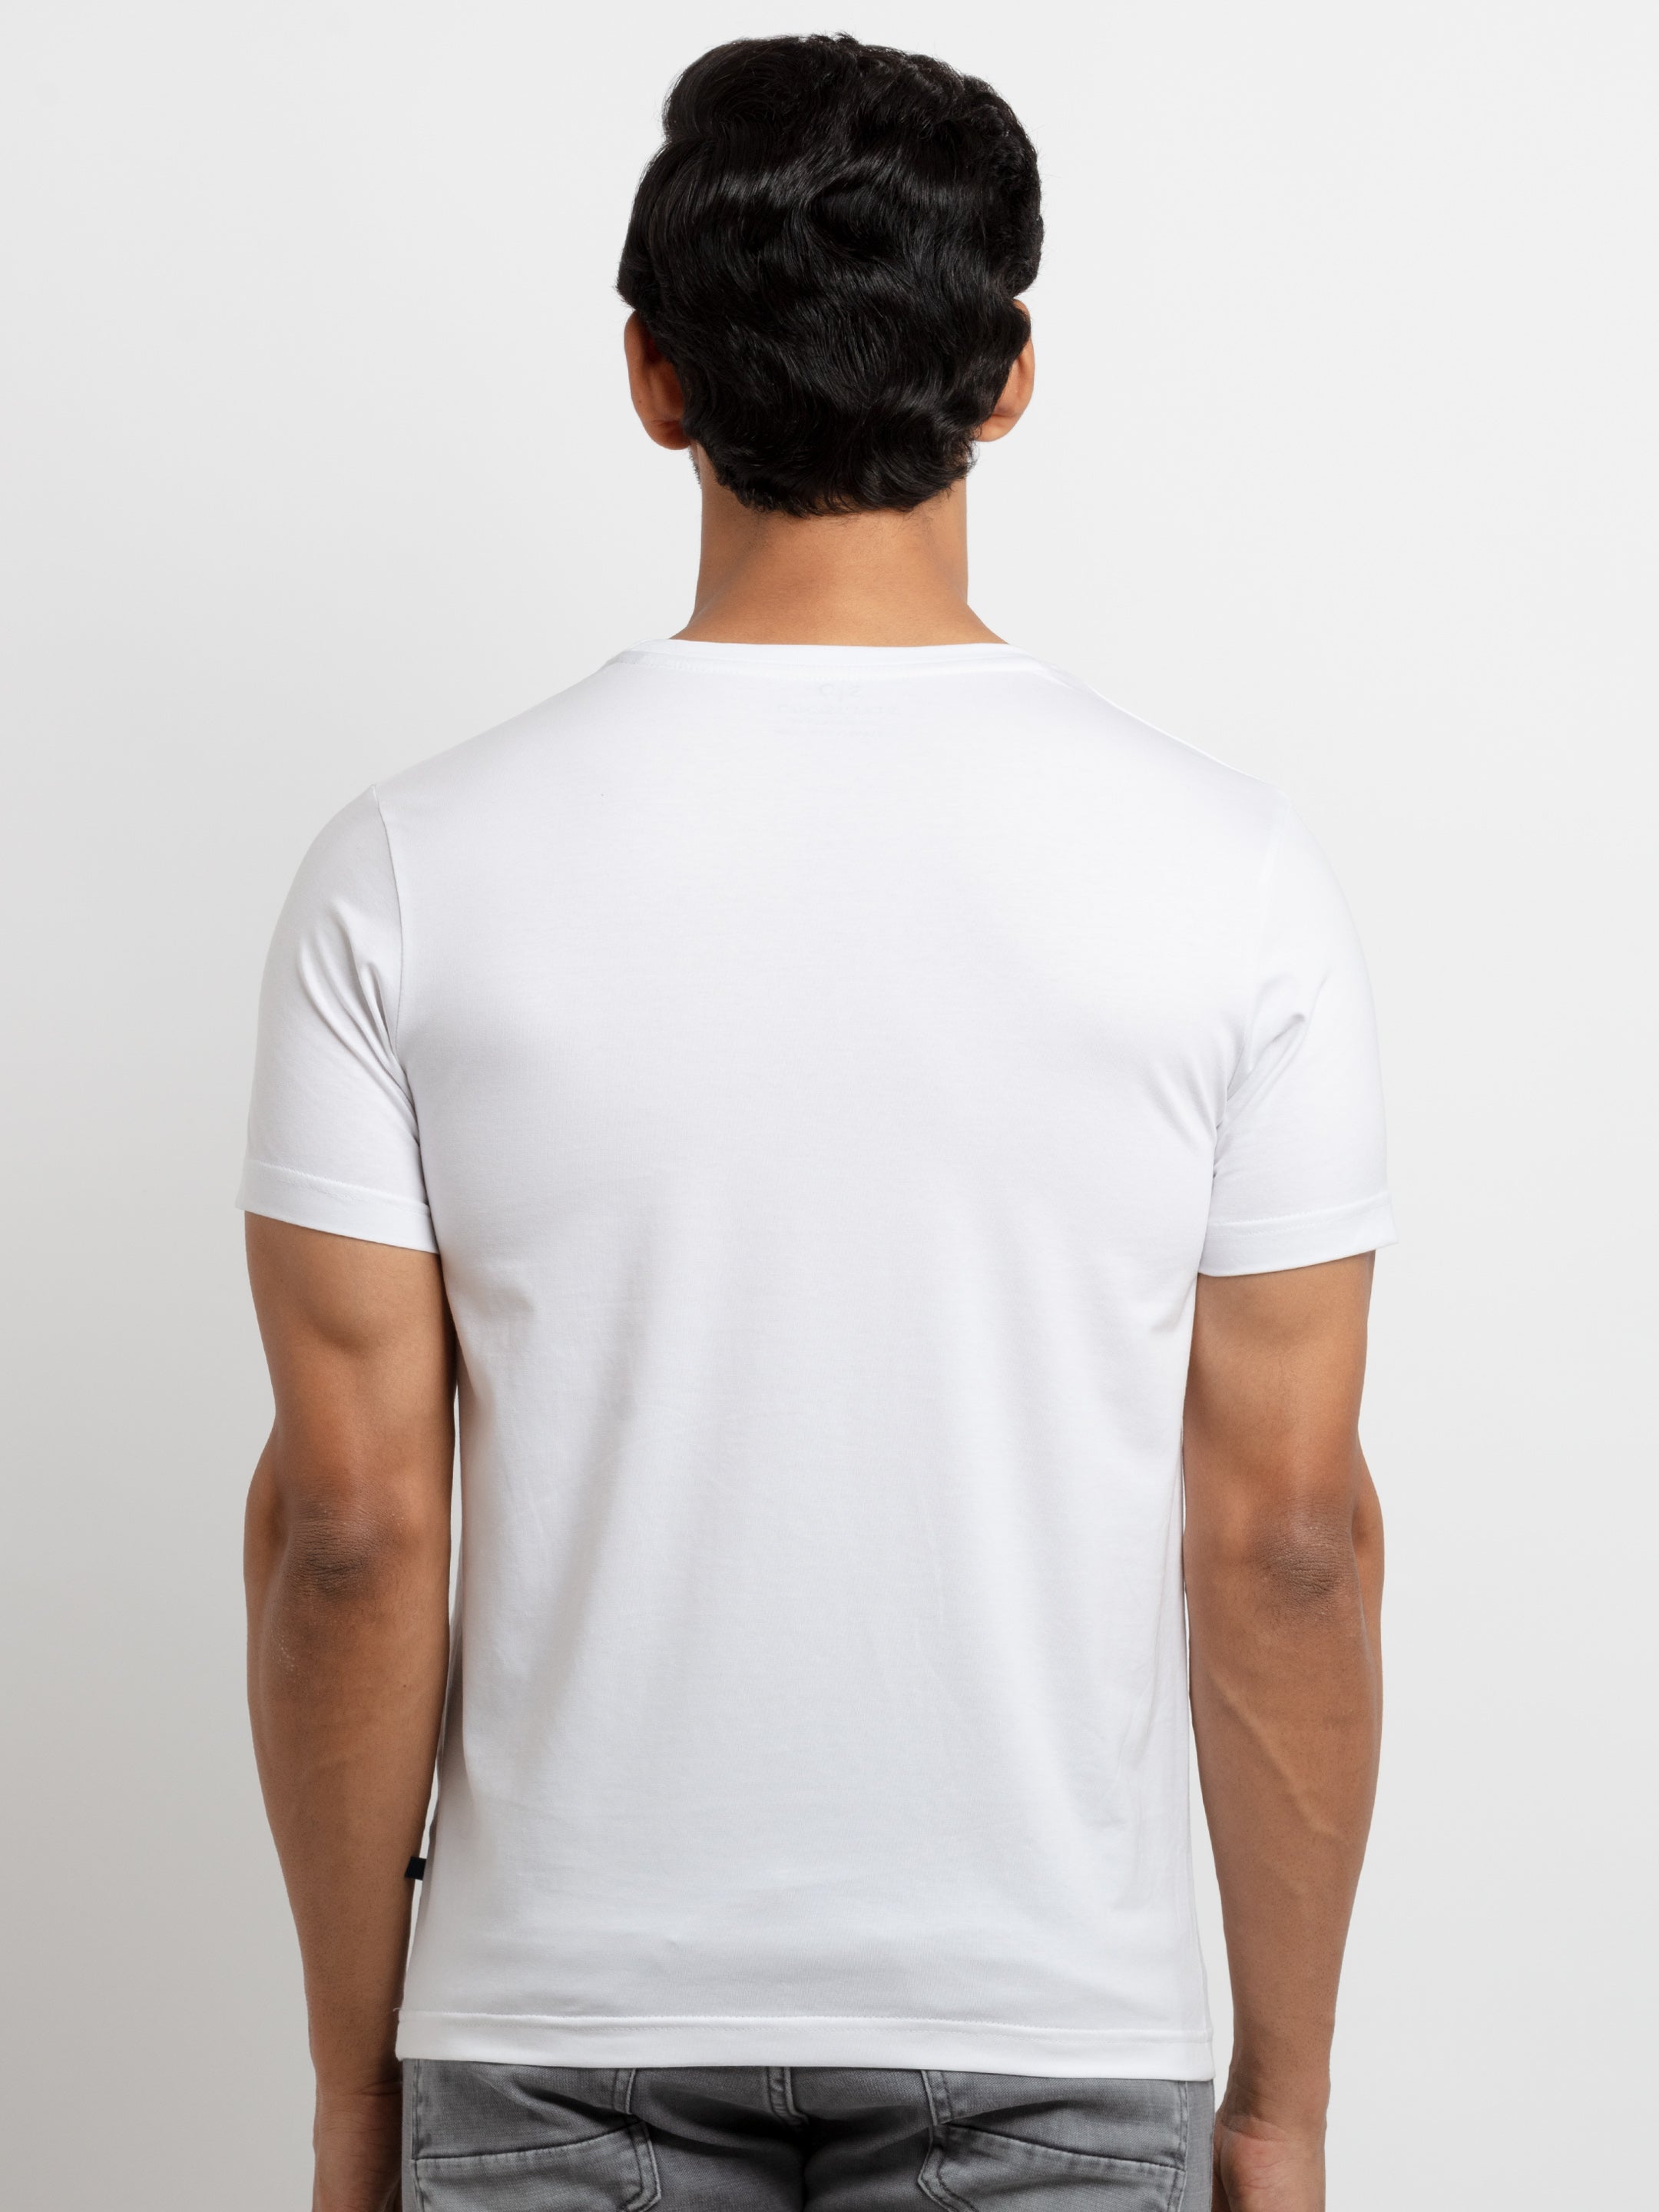 Mens Printed Round Neck T-shirt